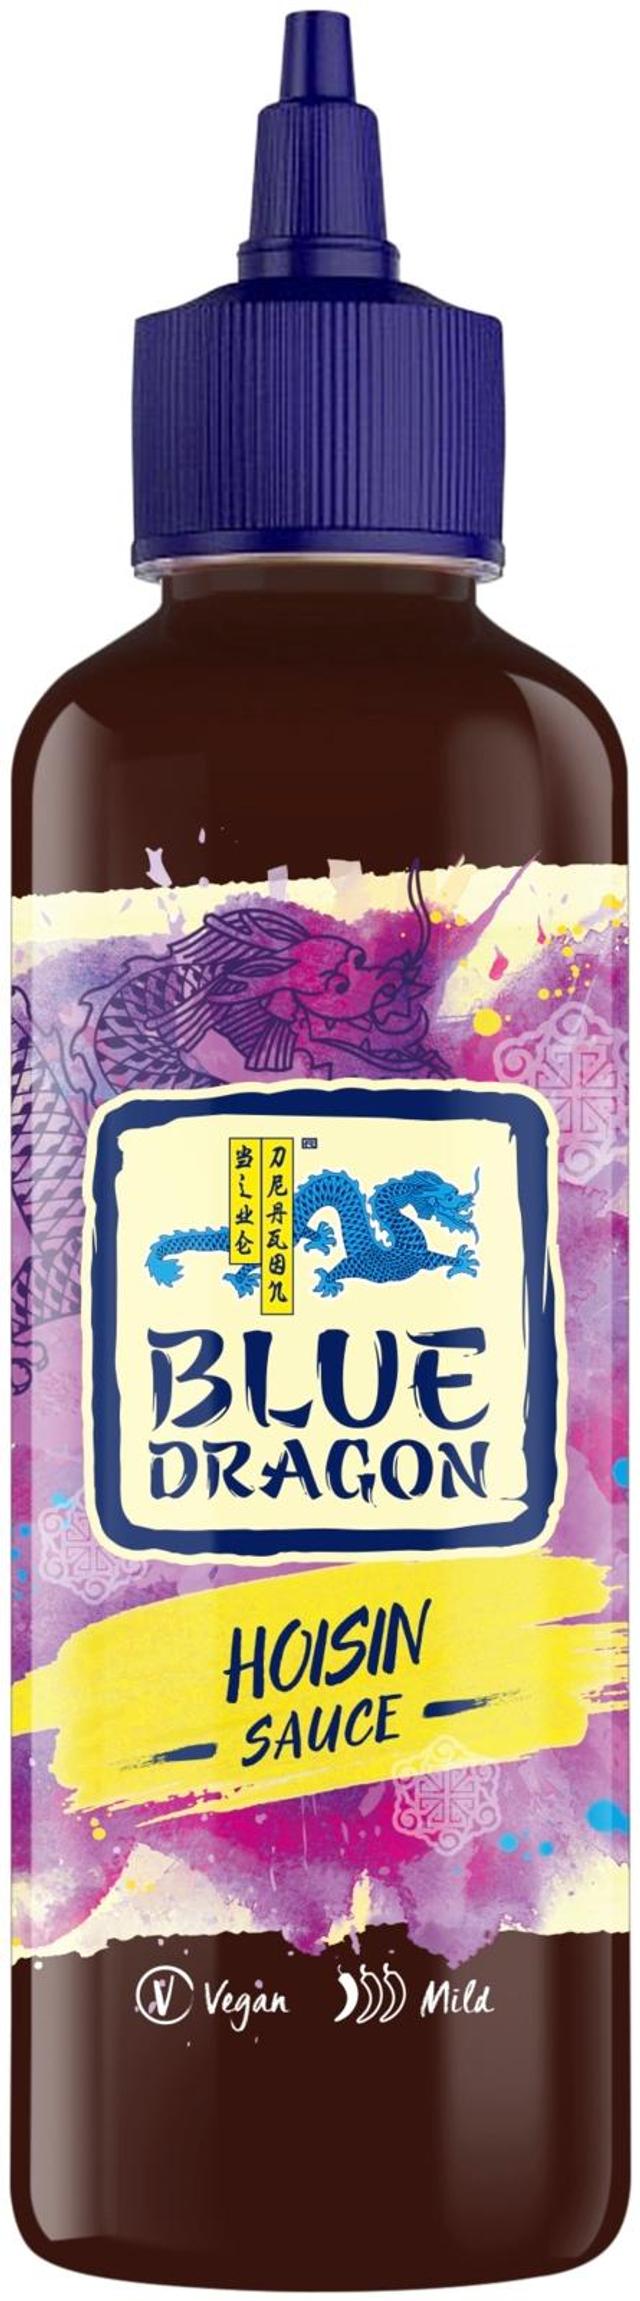 Blue Dragon Hoisin kastike 250ml